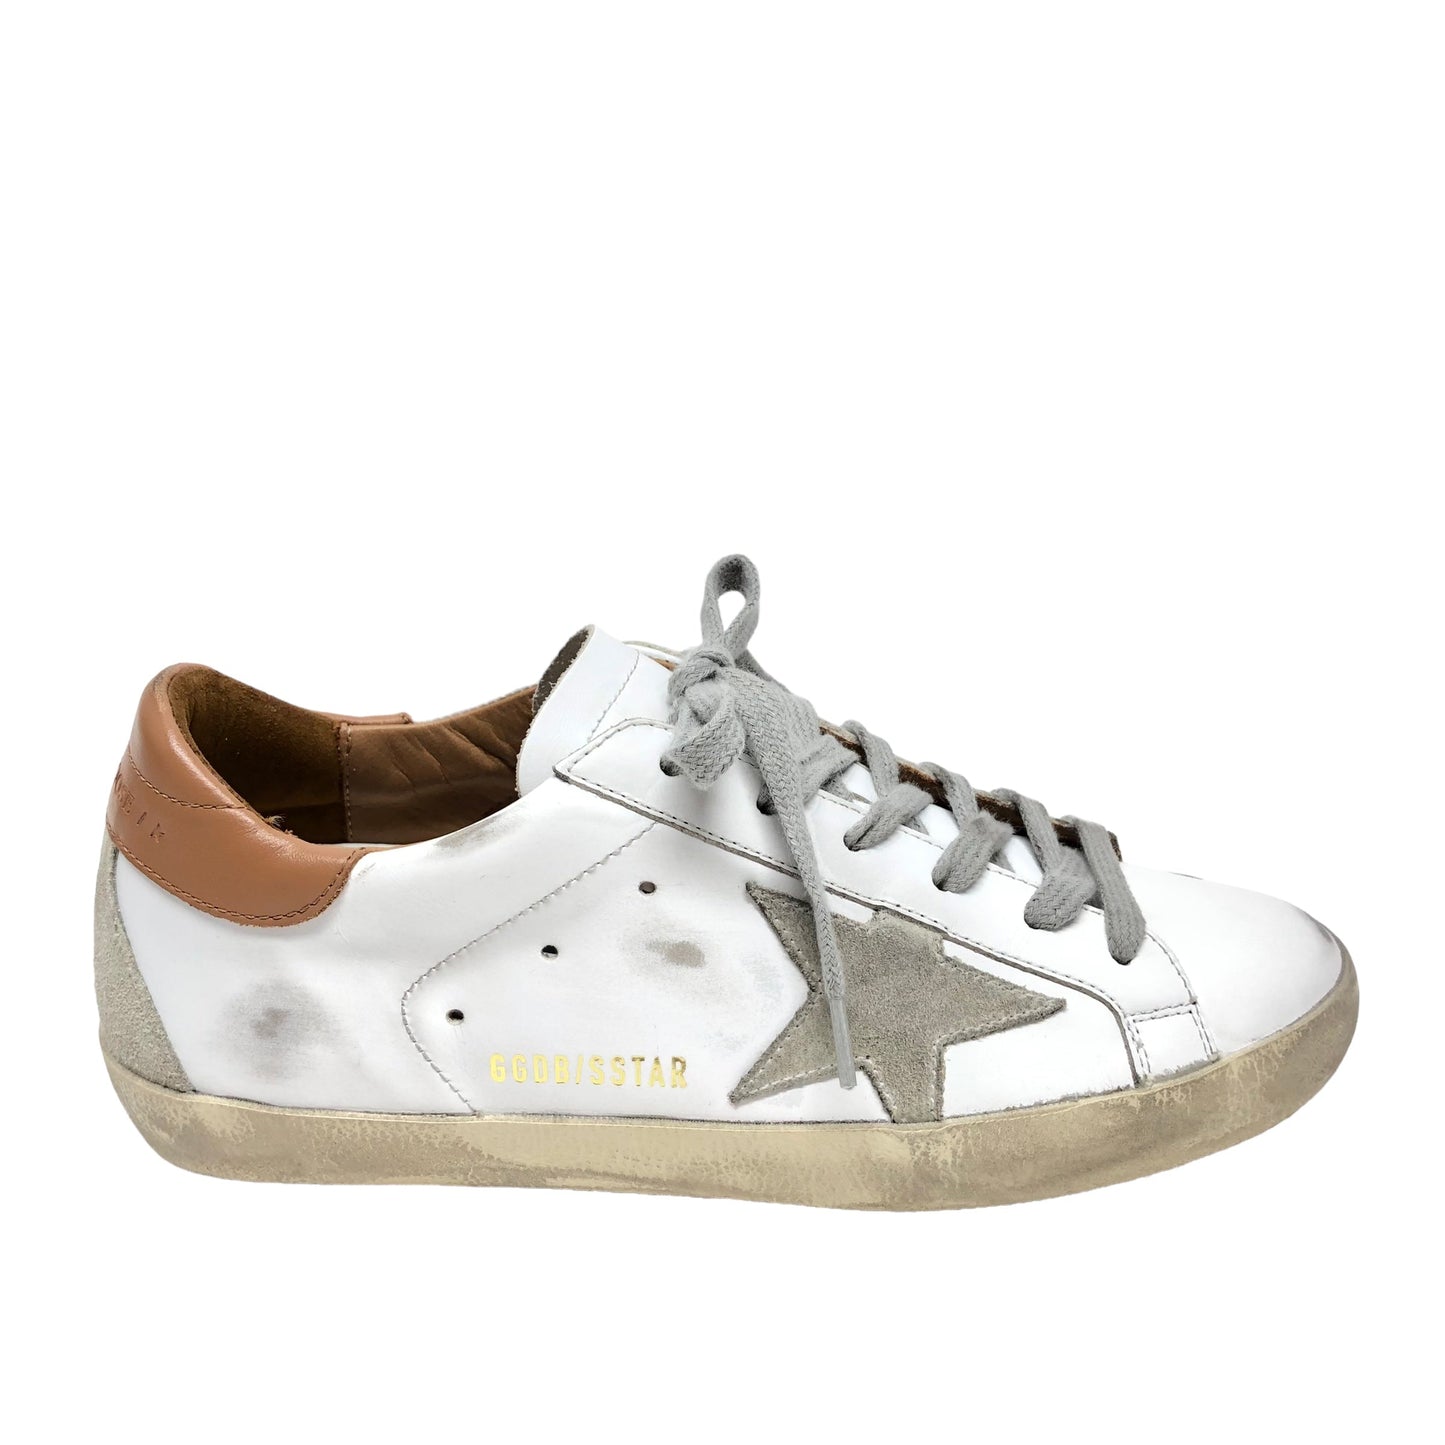 White Shoes Luxury Designer Golden Goose, Size 6.5